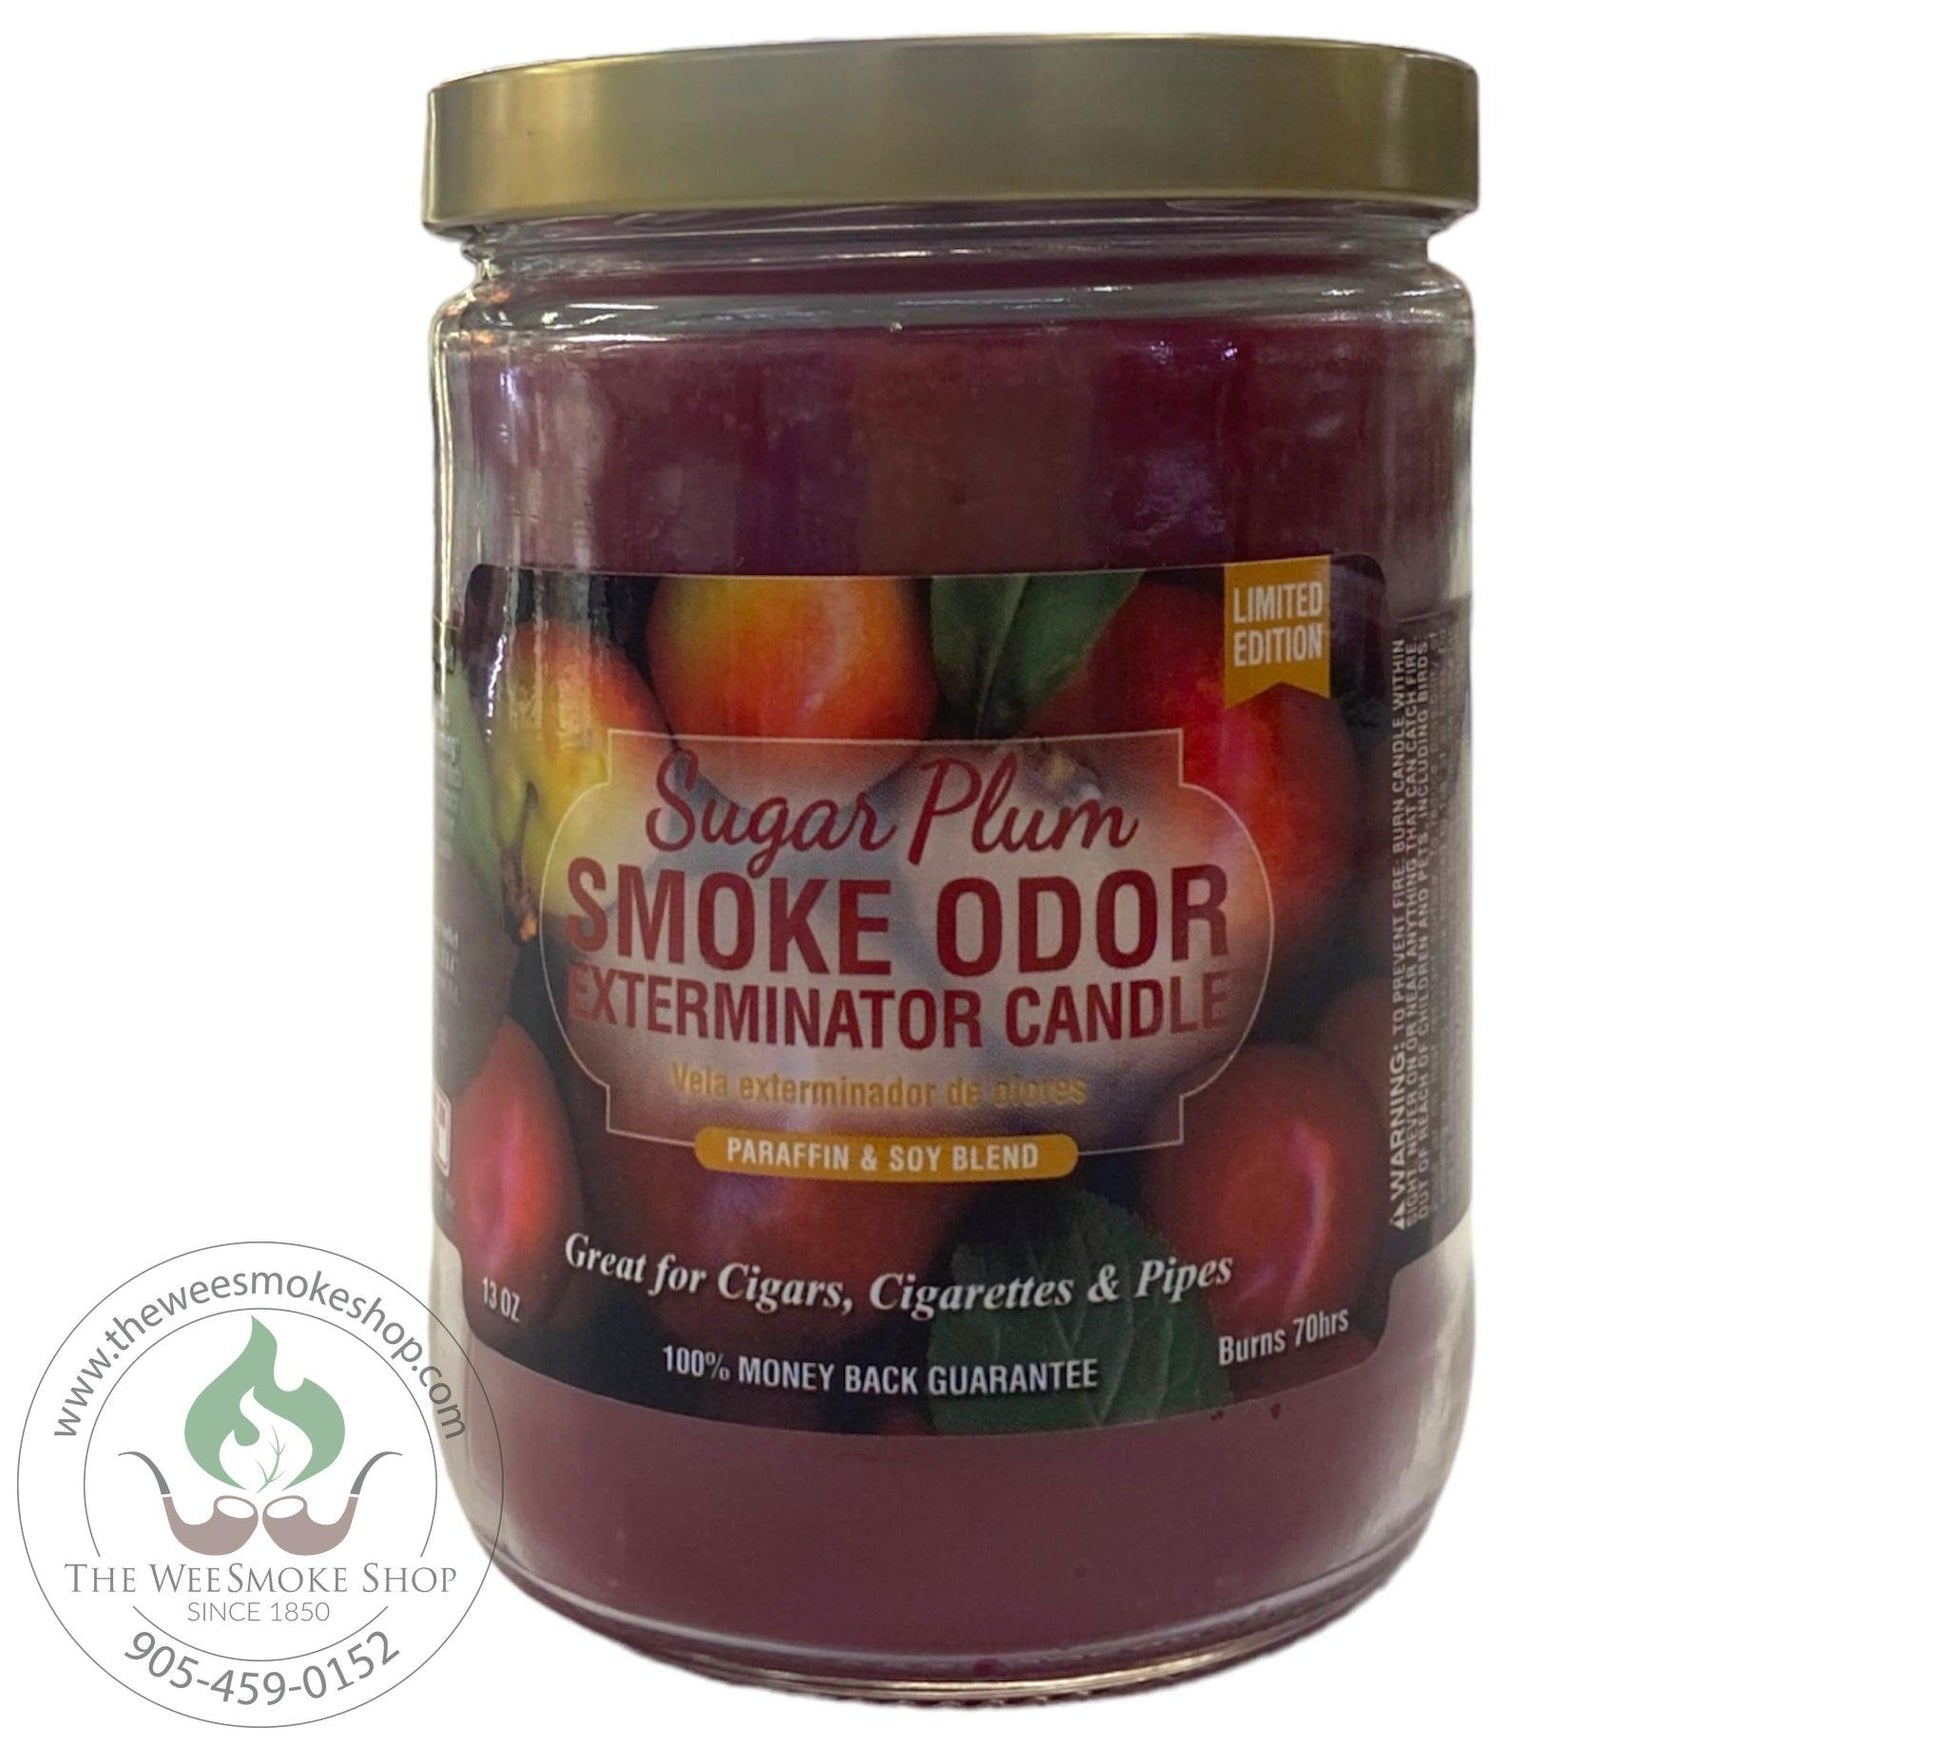 Sugar Plum Smoke Odor Exterminator Candle-The Wee Smoke Shop